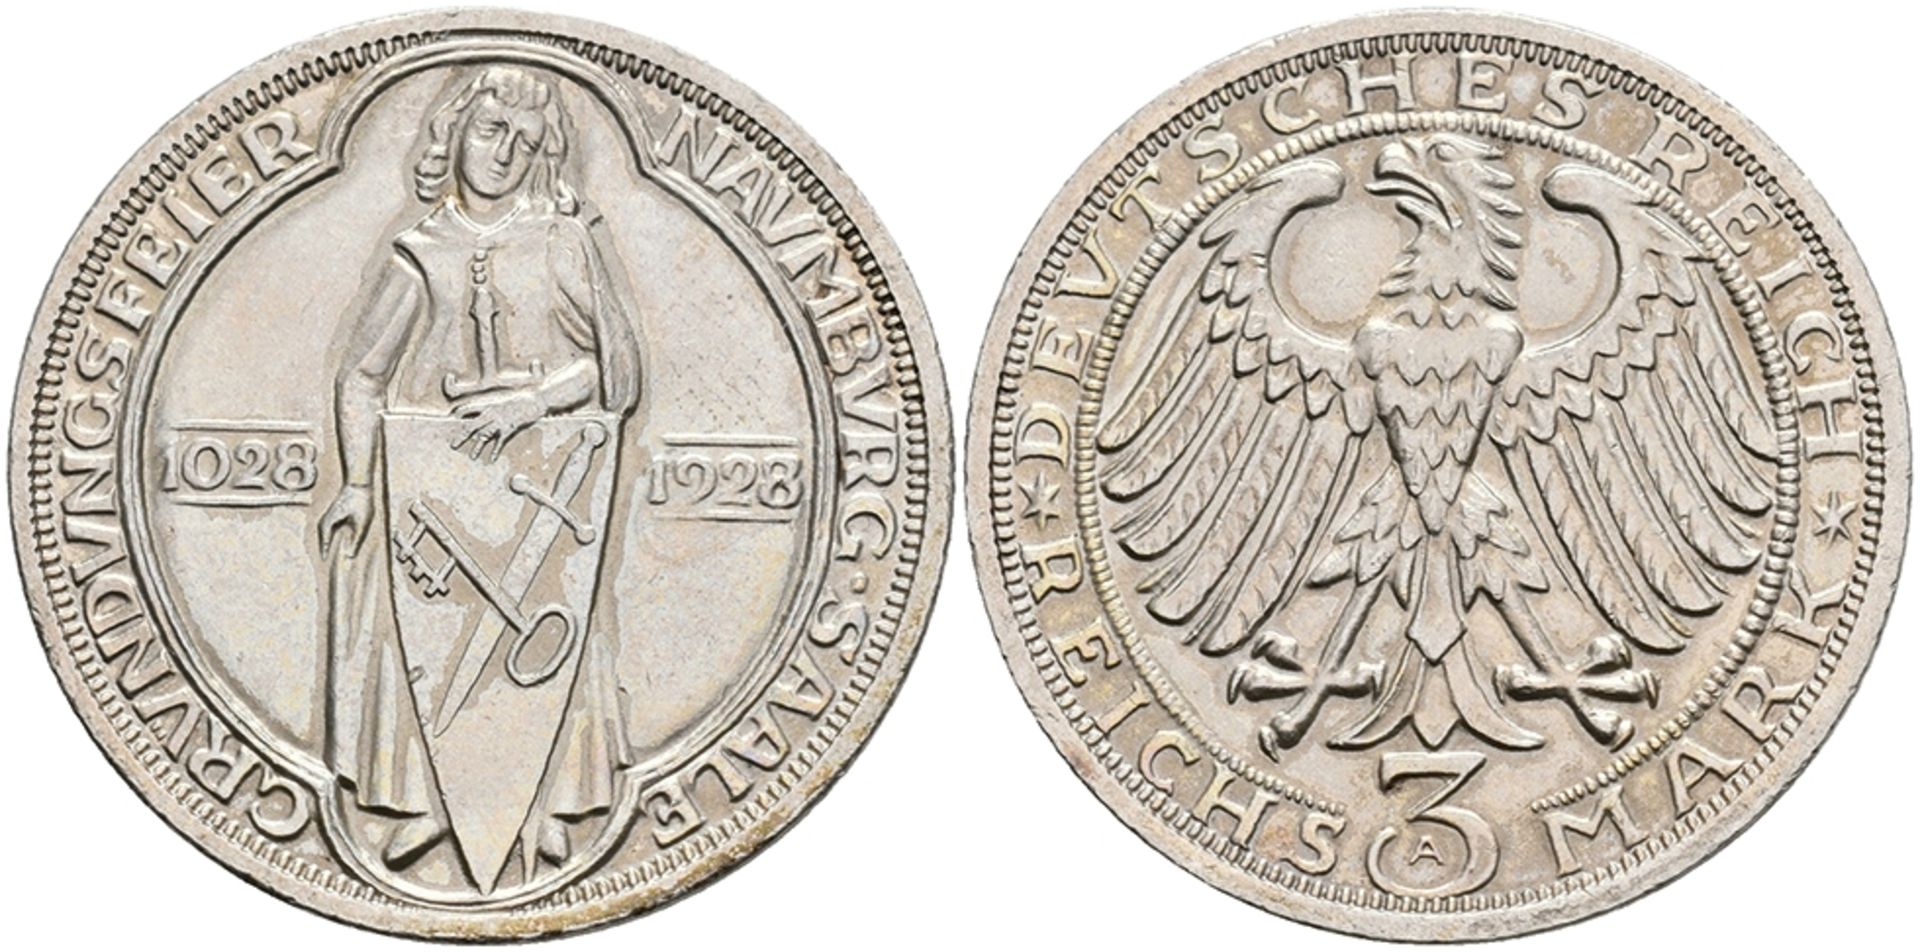 3 Reichsmark, 1928, Naumburg, kl. Rf., vz. J. 333.